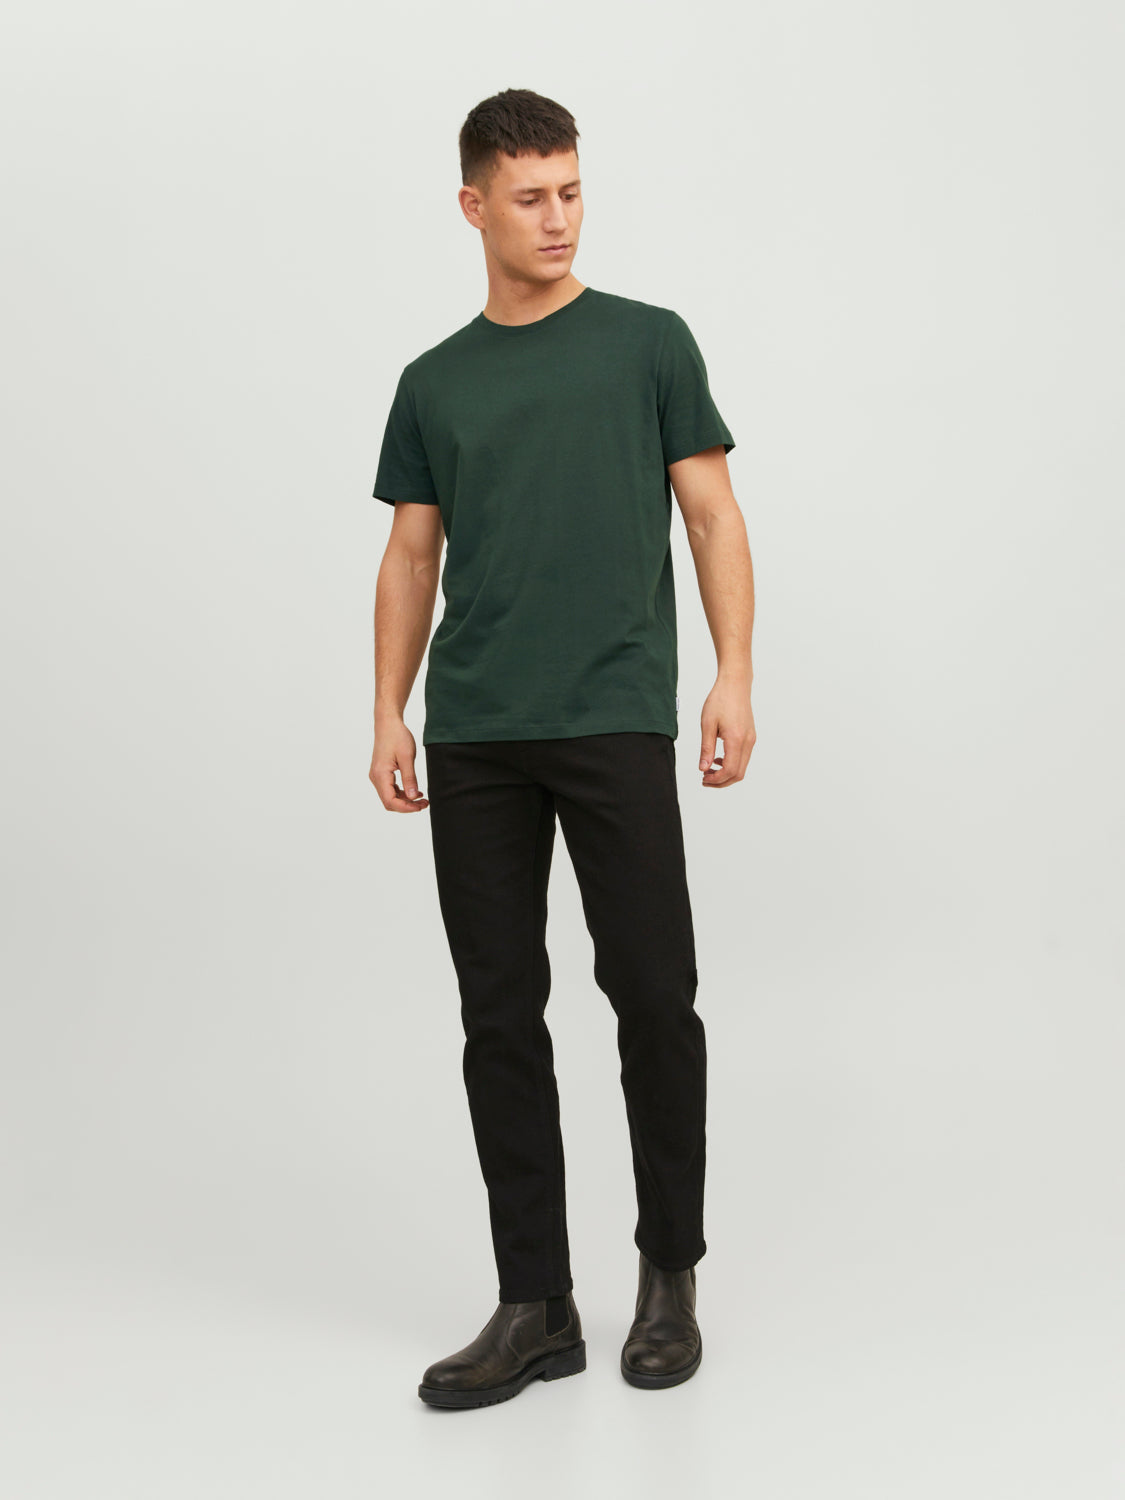 Camiseta básica de manga corta verde oscuro - JJEORGANIC